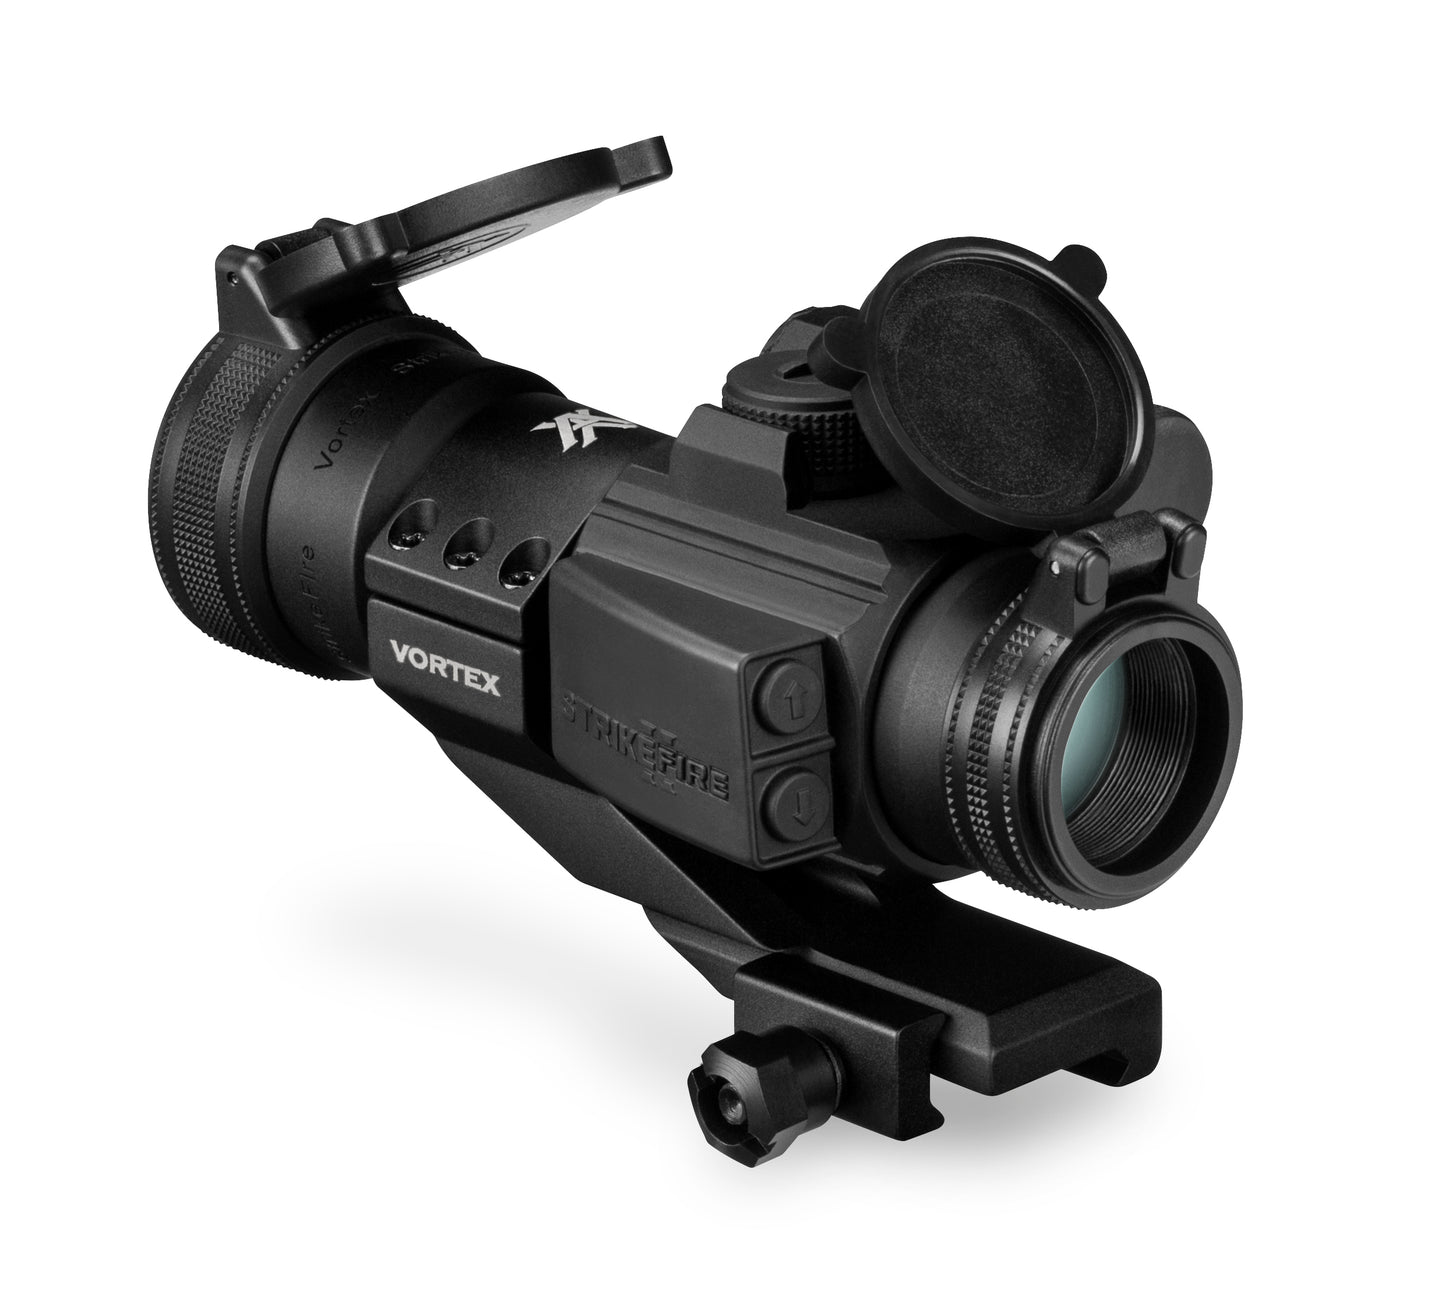 StrikeFire II Red/Green Dot scope - AR15